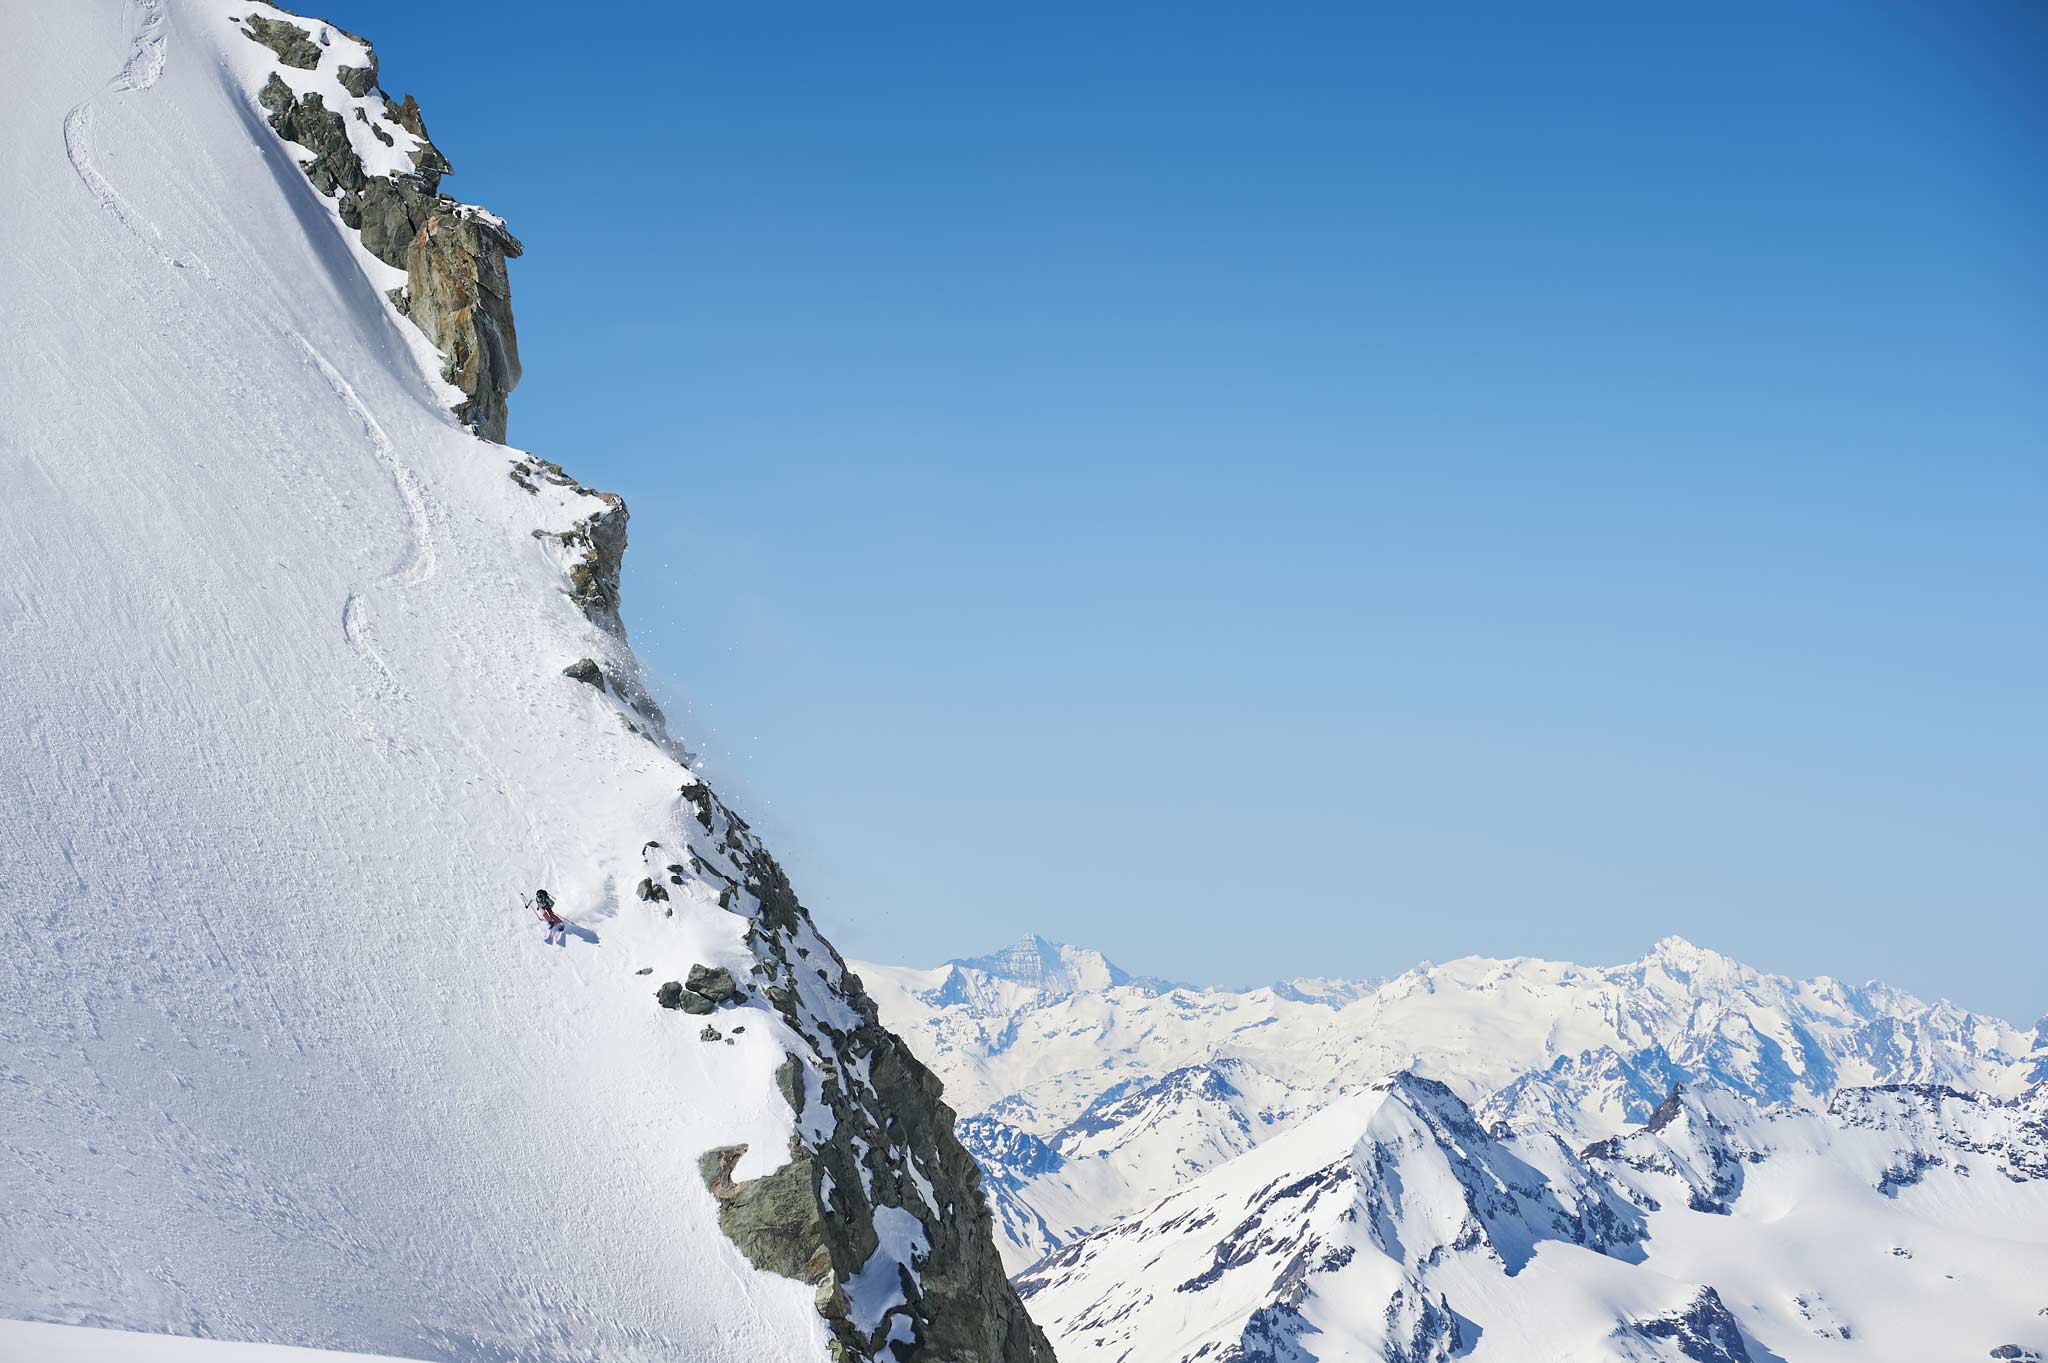 "Zermatt To Verbier" Full Movie - 2020 - The Faction Collective